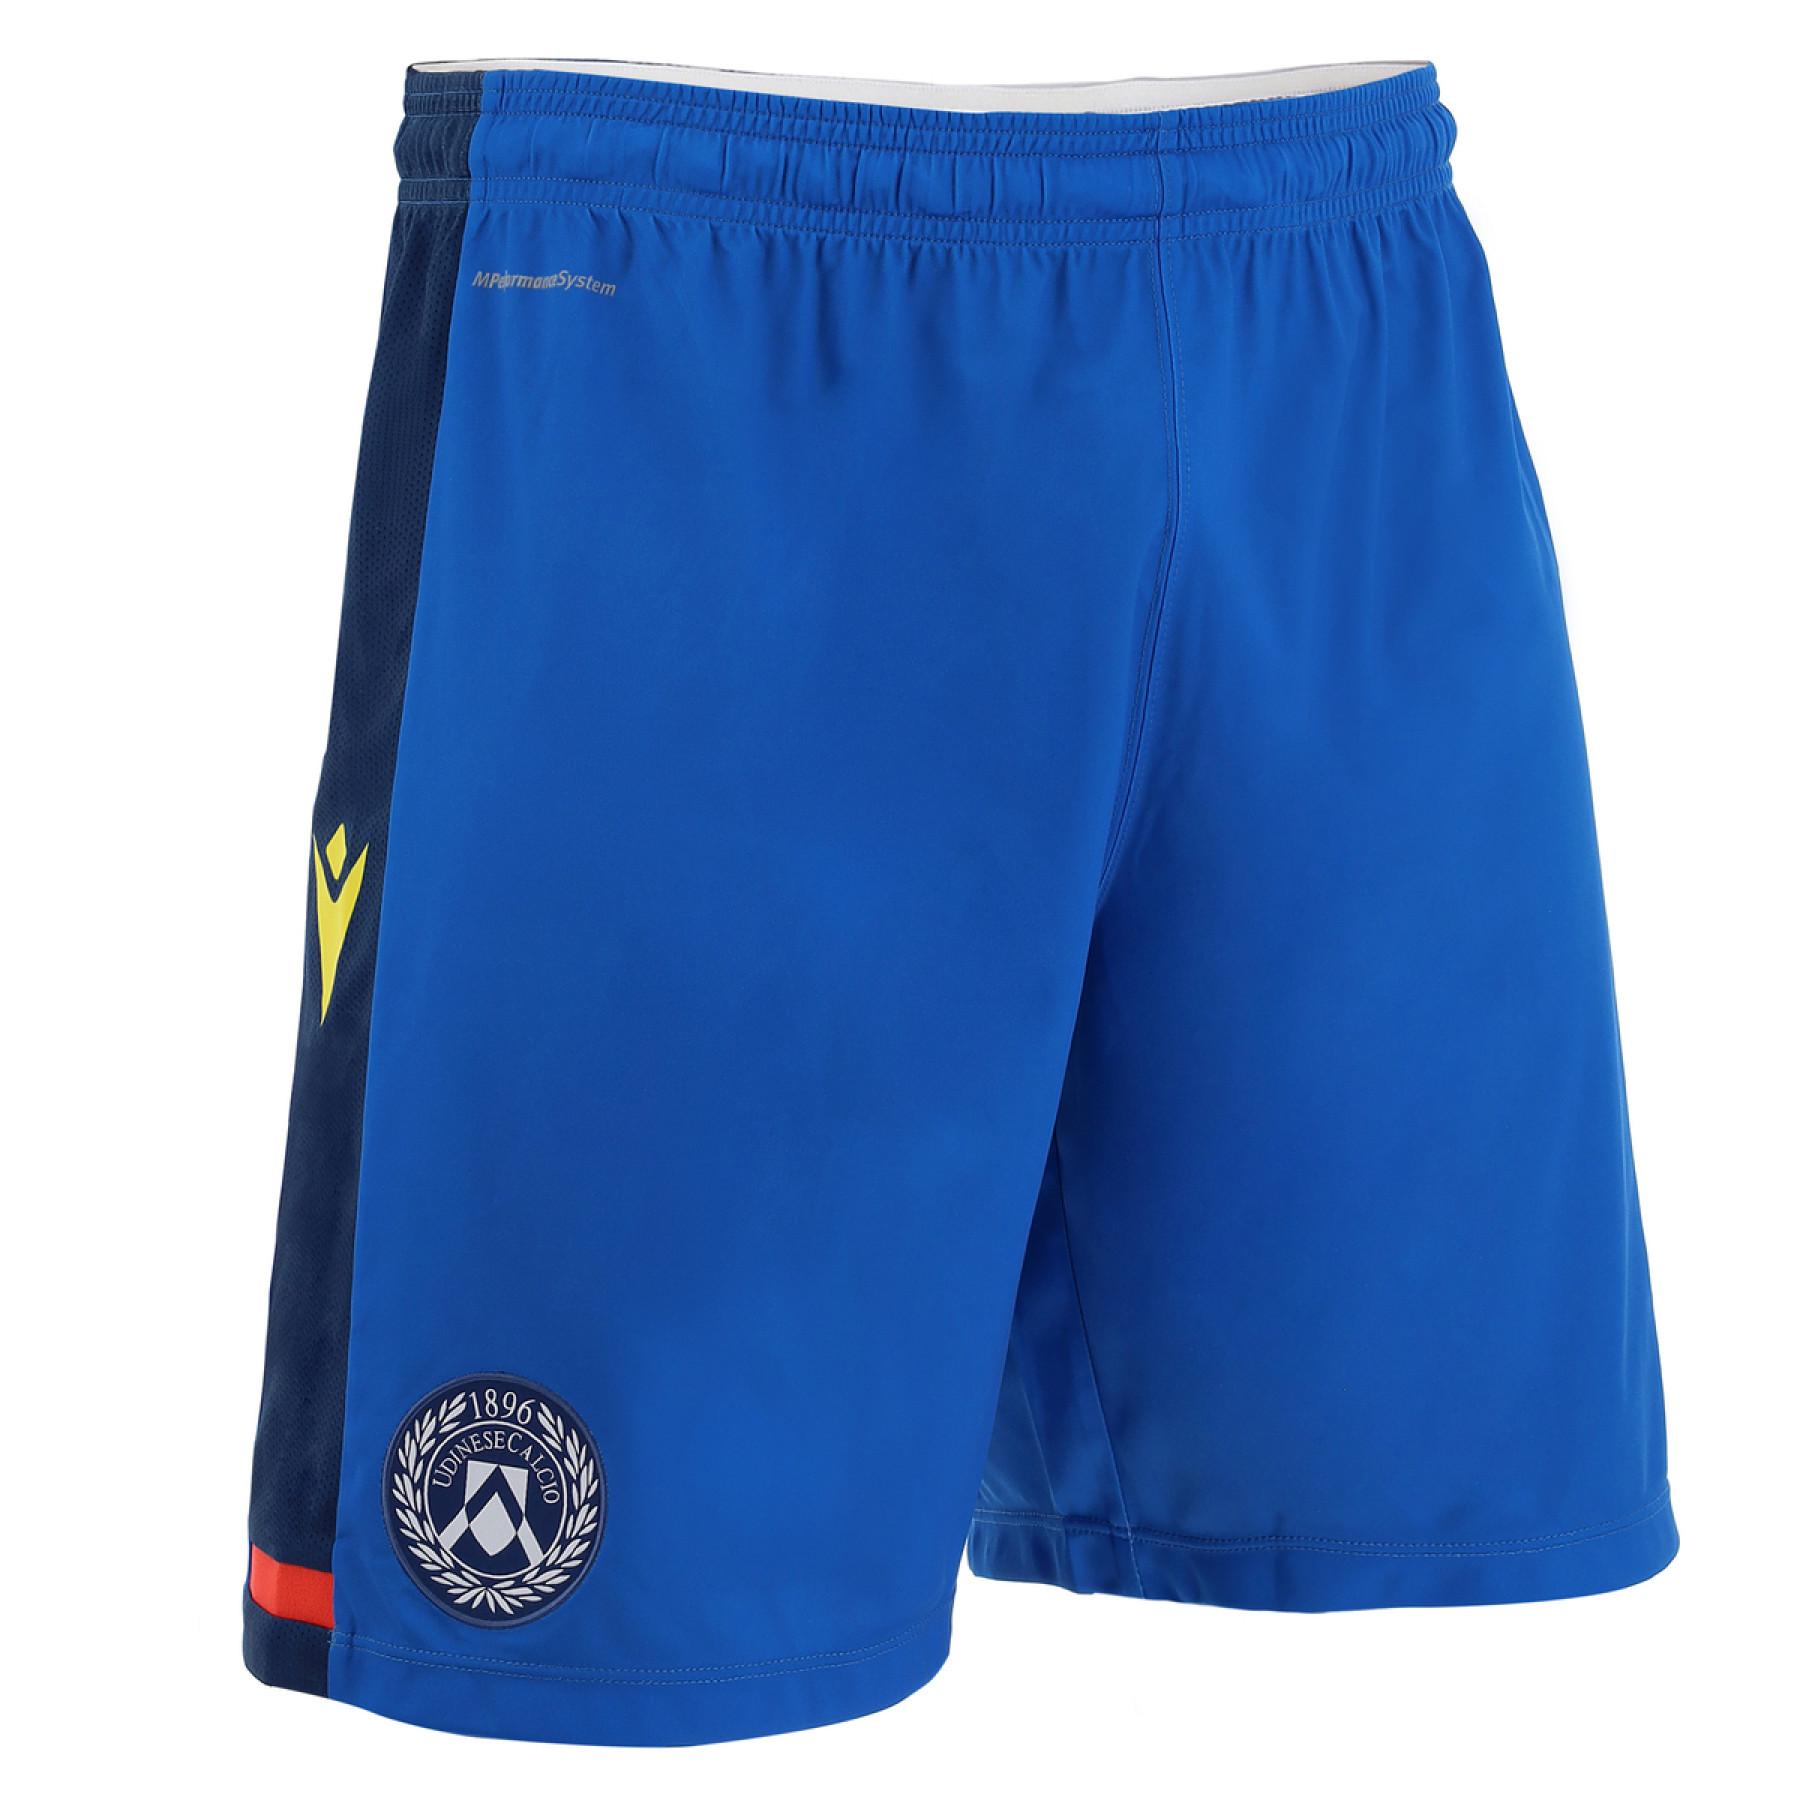 Outdoor shorts Udinese calcio 2020/21